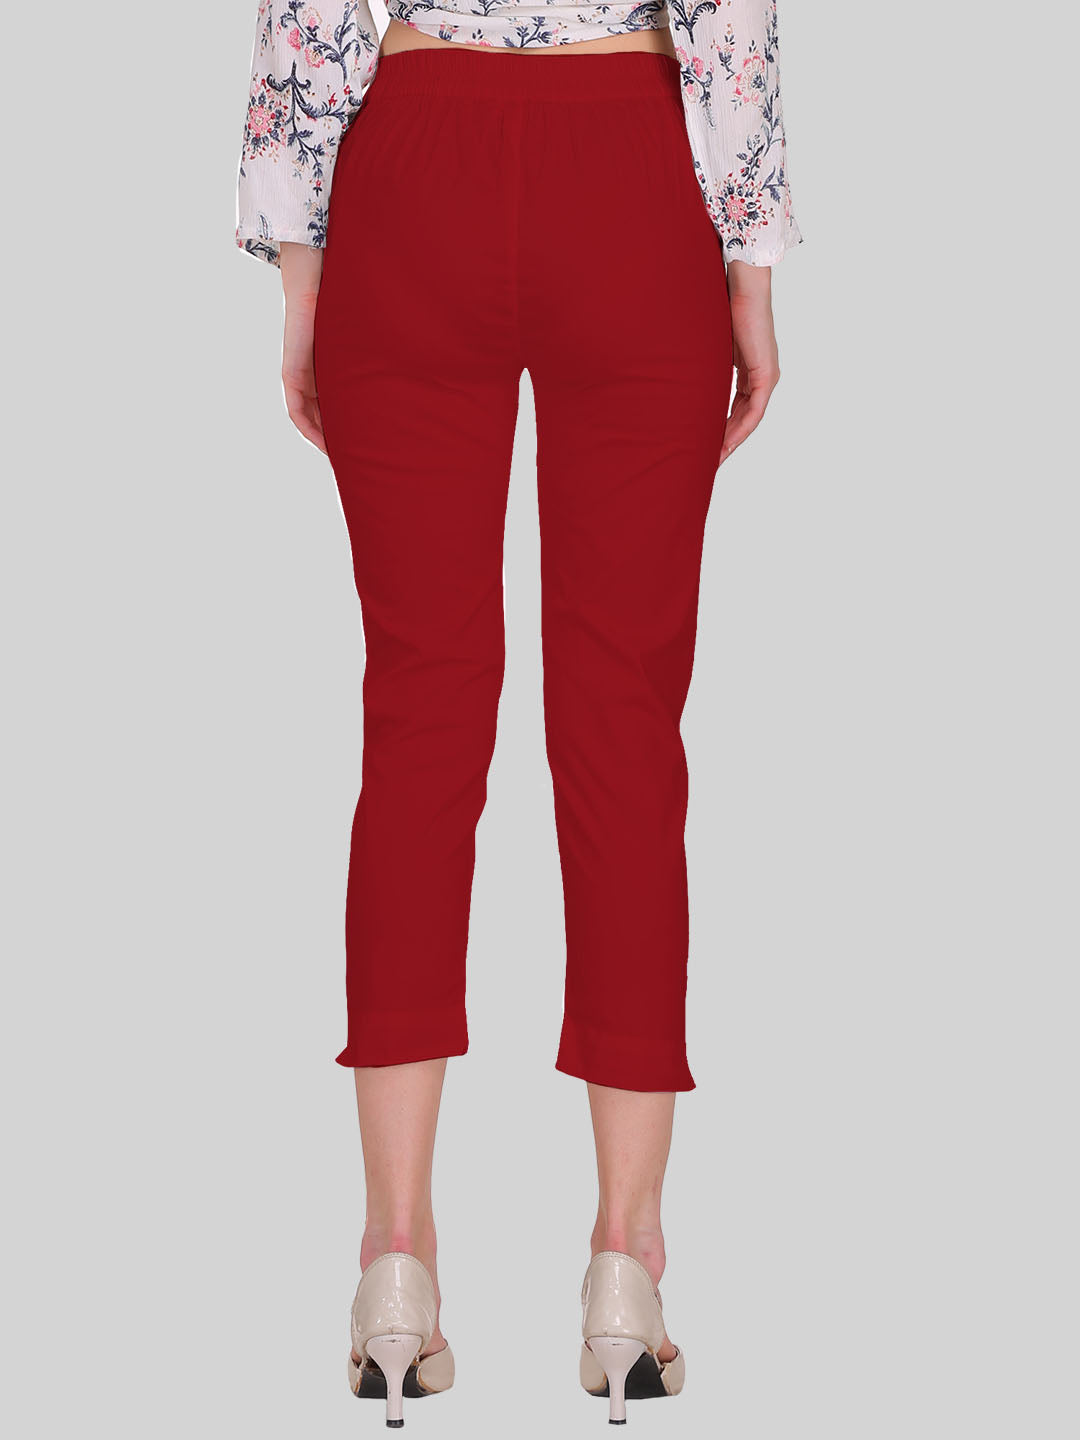 Saundarya Women's Crimson Red Cropped Pants